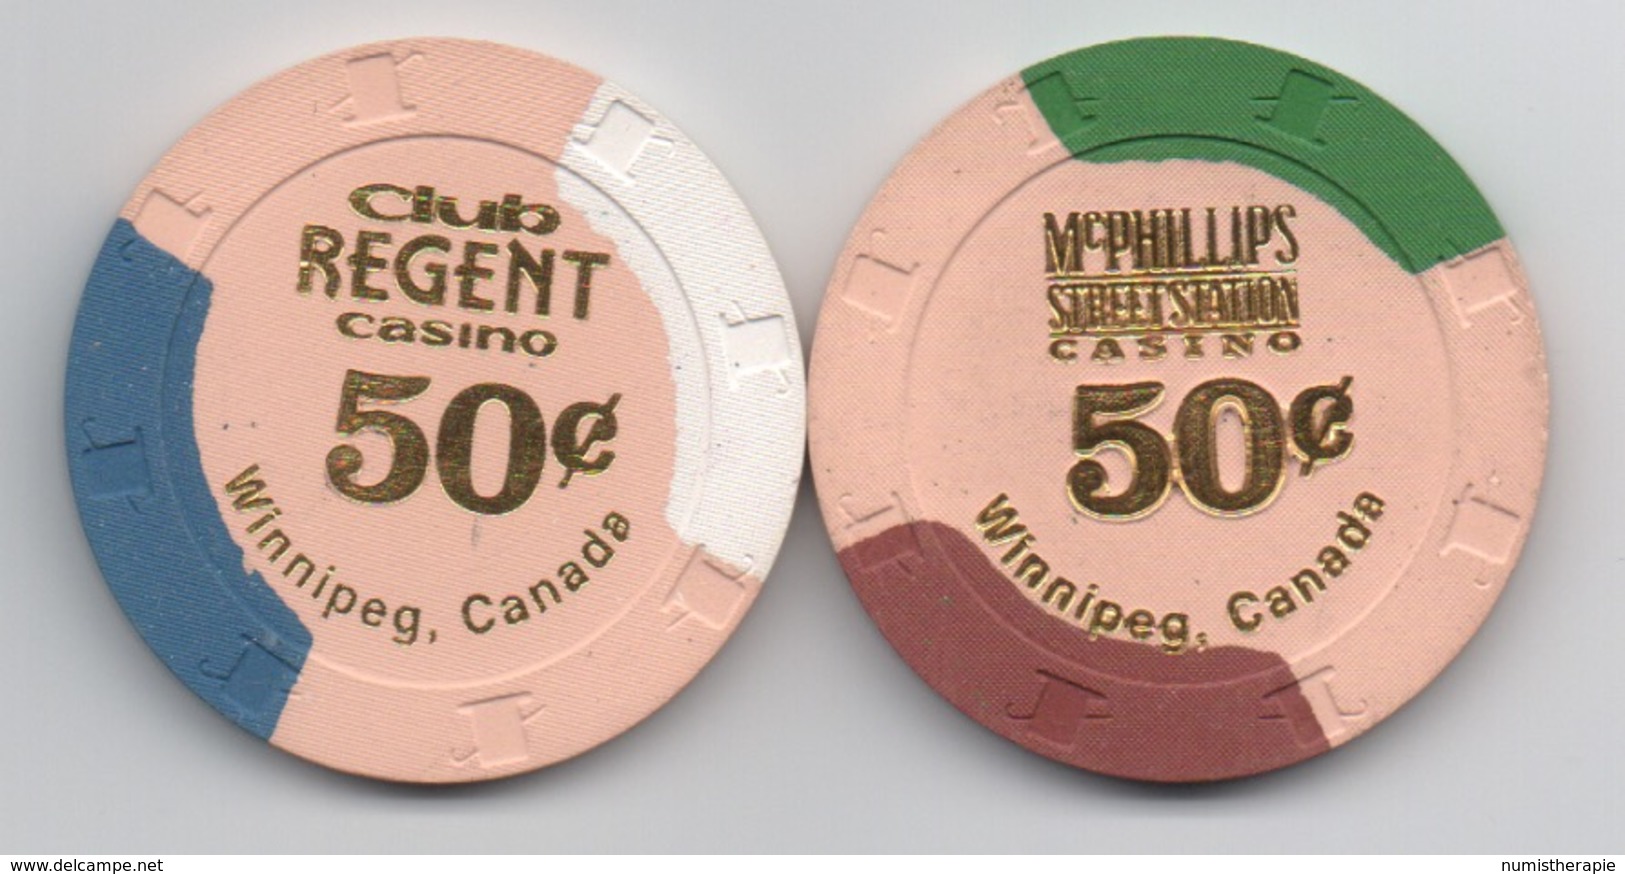 Lot De 2 Jetons De Casinos Winnipeg Canada : Club Regent Casino 50¢ & McPhillips Street Station Casino 50¢ - Casino